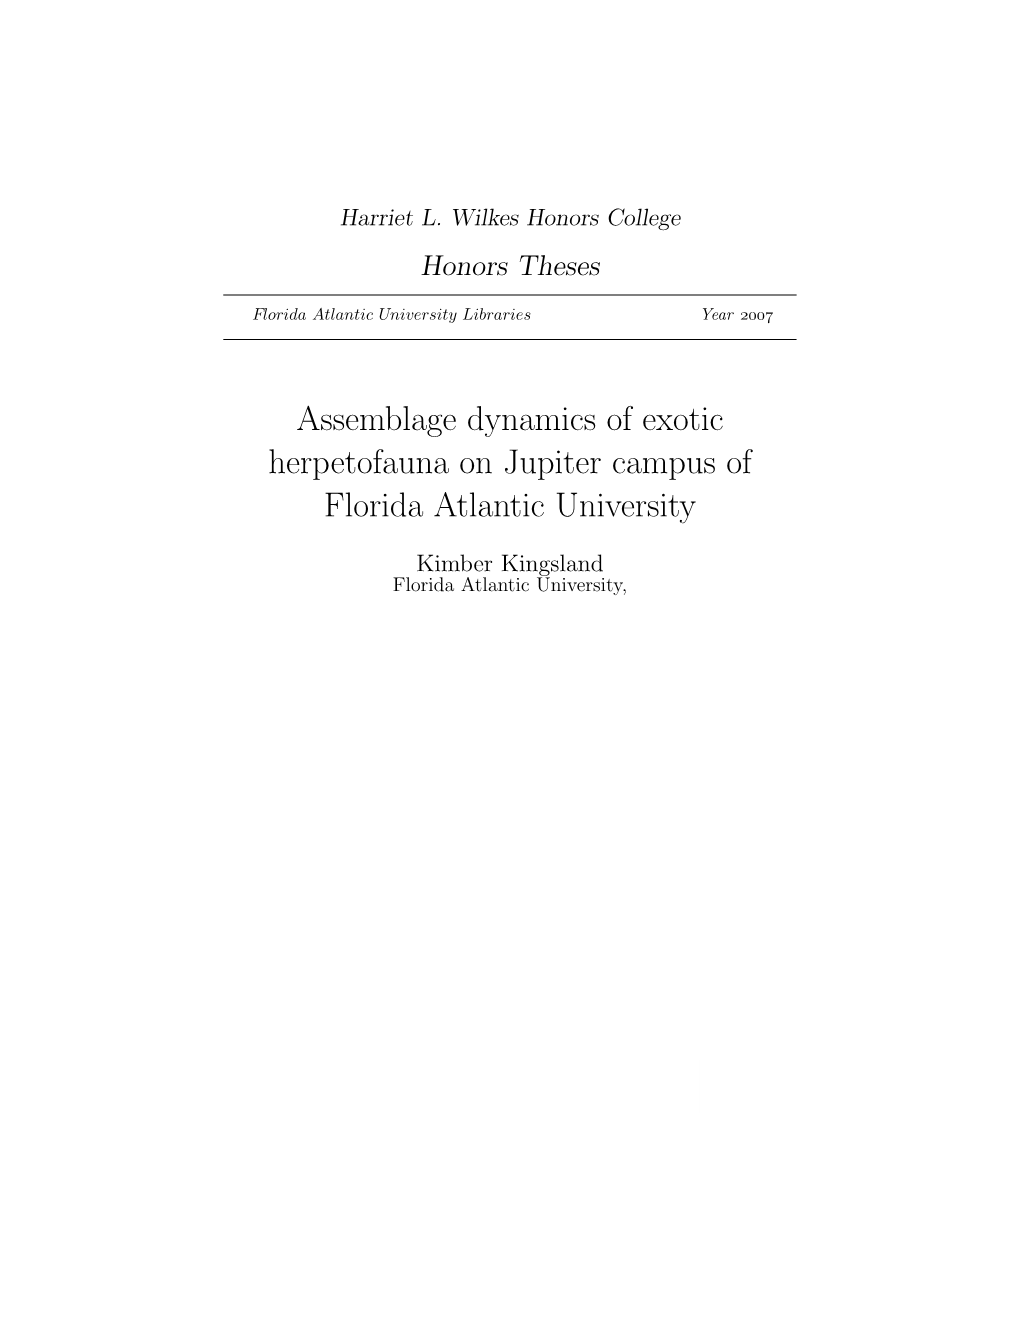 Assemblage Dynamics of Exotic Herpetofauna on Jupiter Campus of Florida Atlantic University